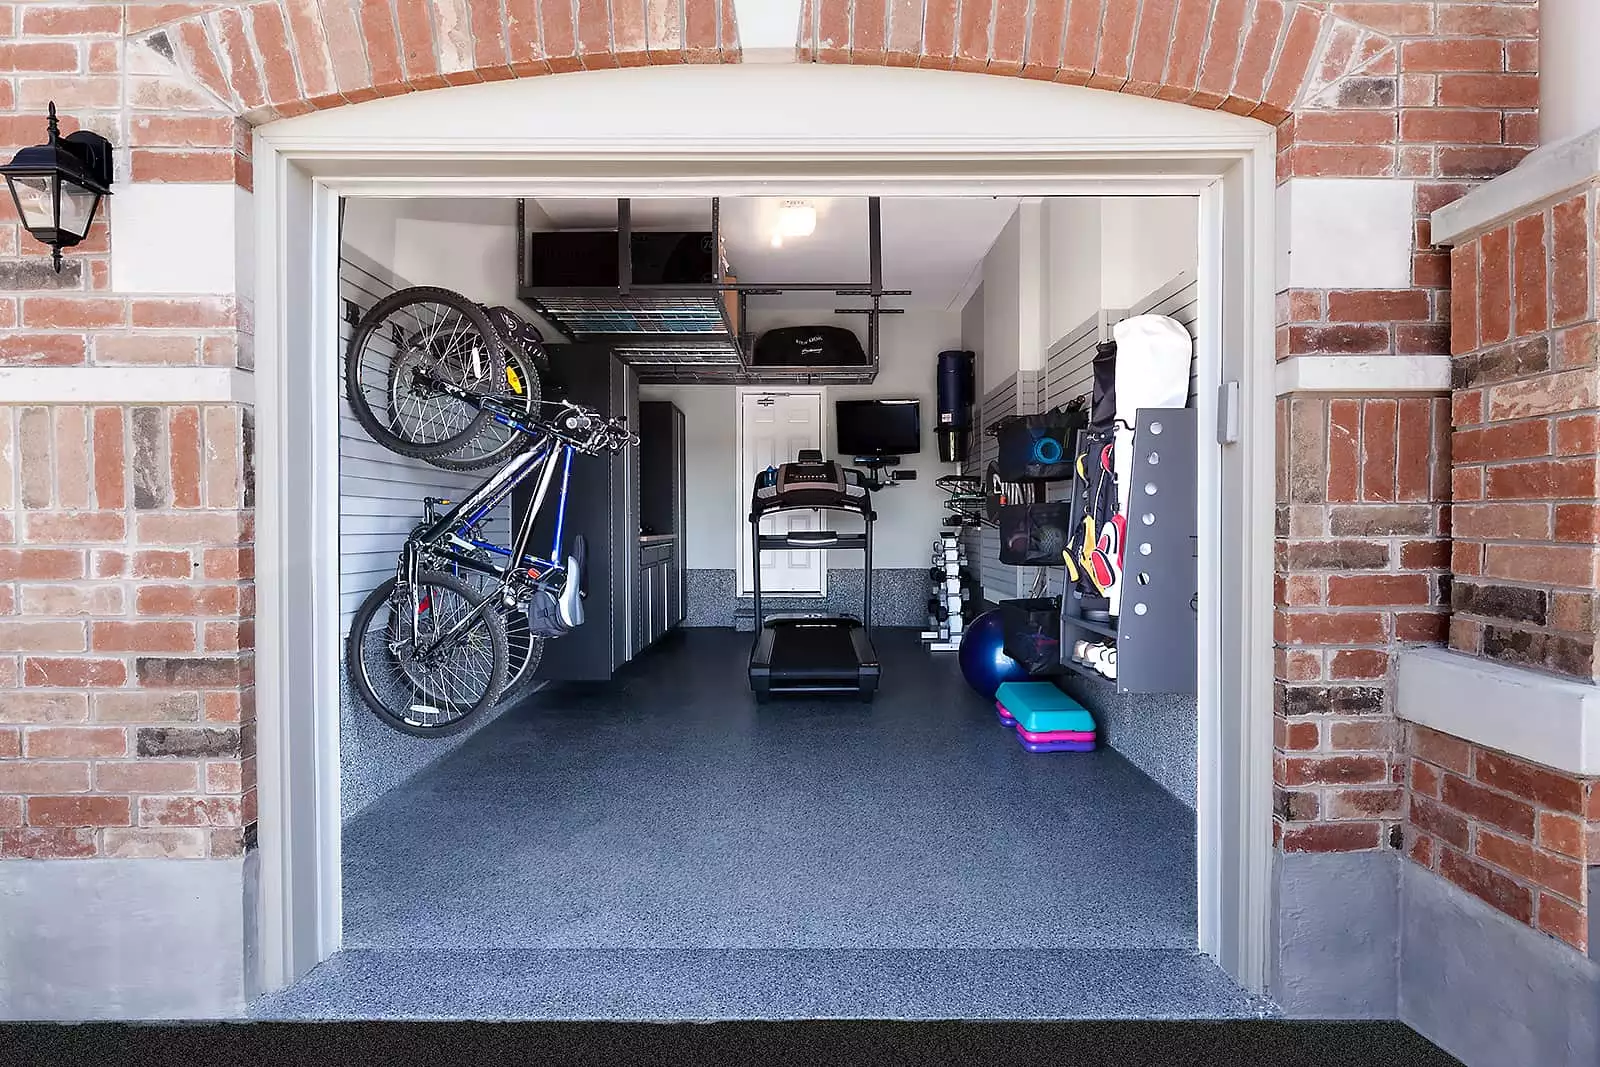 xsingle-car-garage-fitness-room.jpg.pagespeed.ic.Le9zFwWXgg